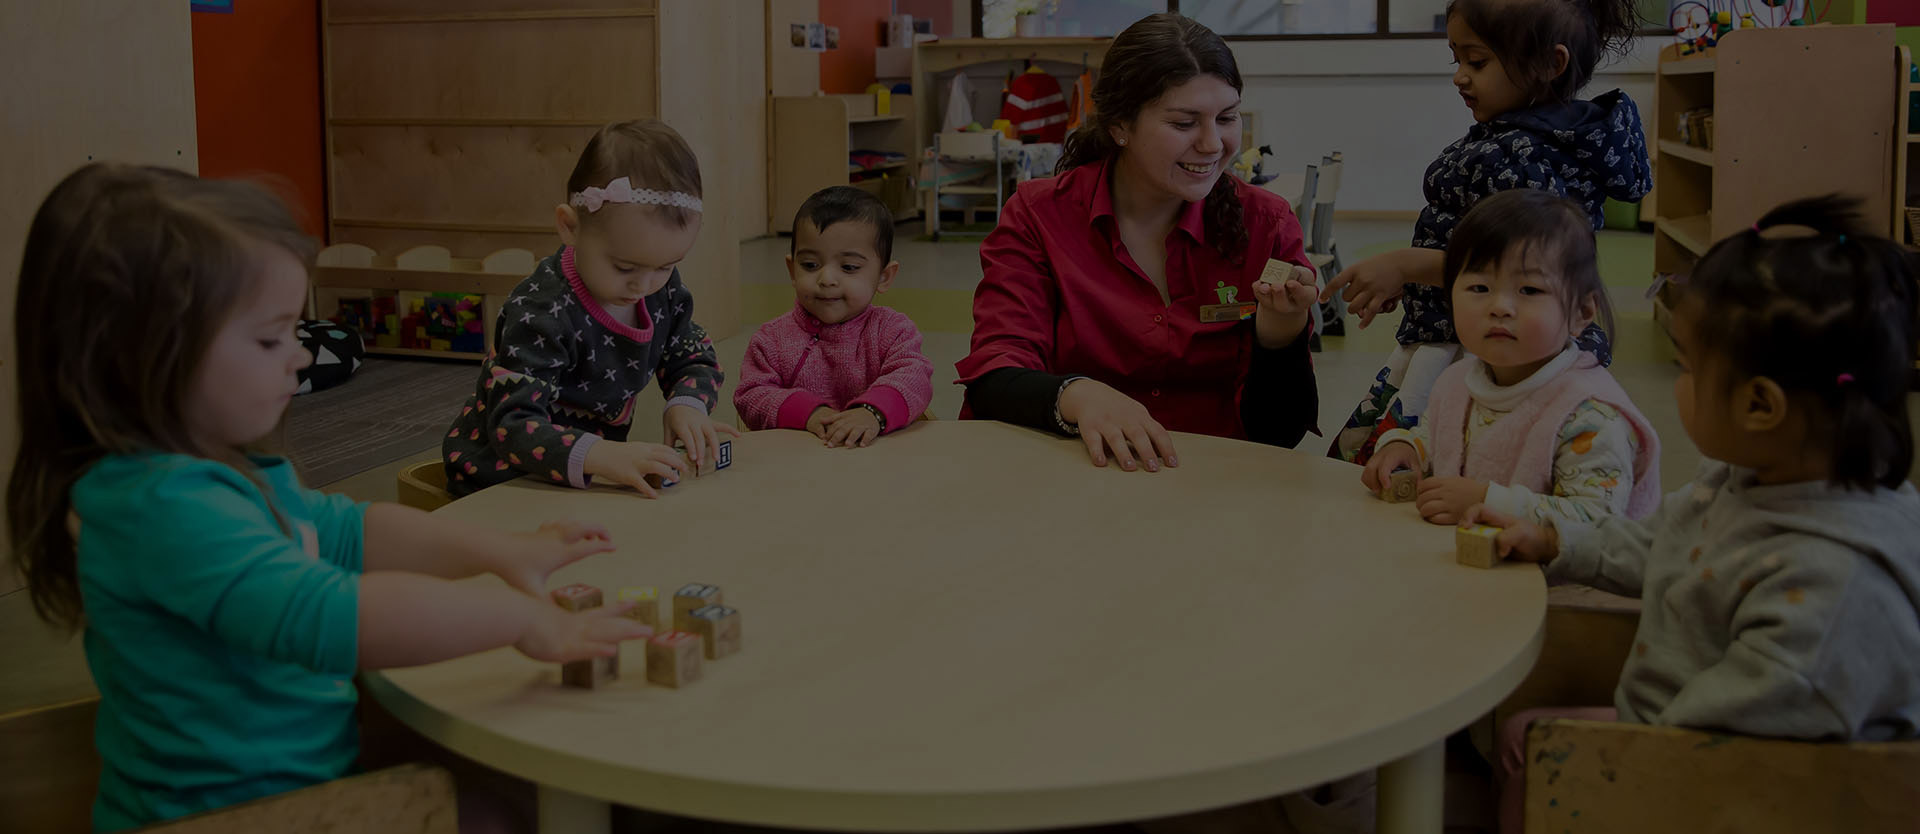 Reggio Emilia Childcare Centres | Parenting Wins: Positive Strategies for a Happy Home